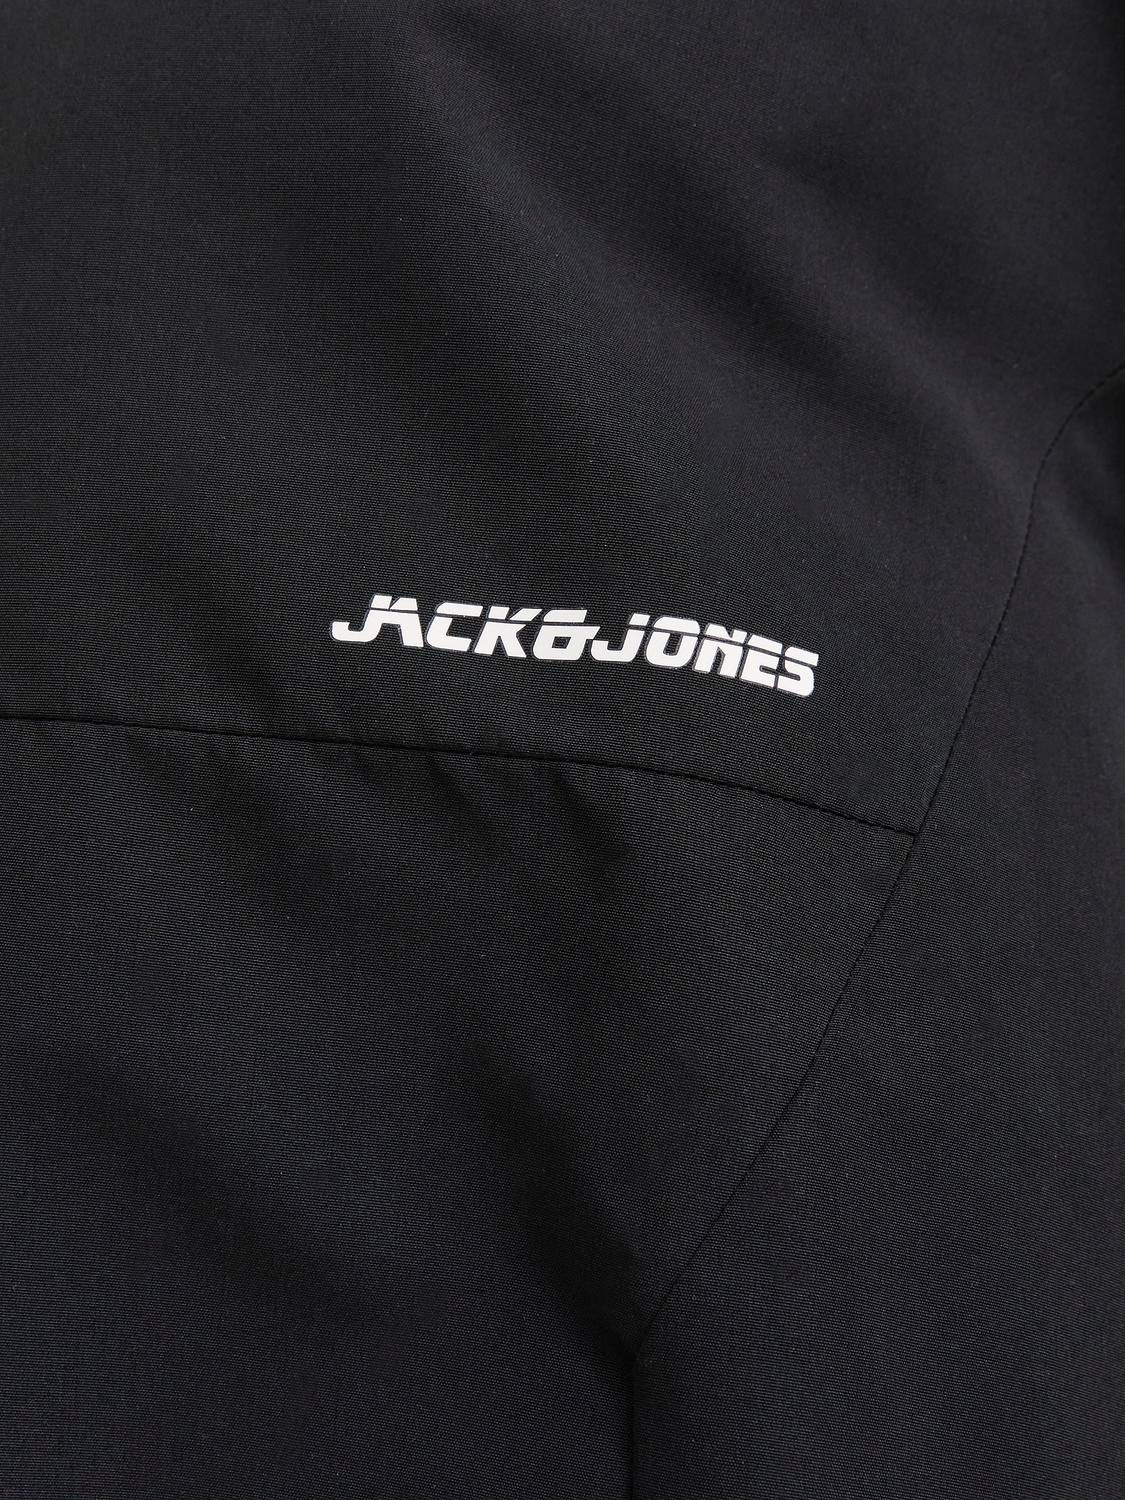 Jack & Jones Plus Size Light jacket -Black - 12254913